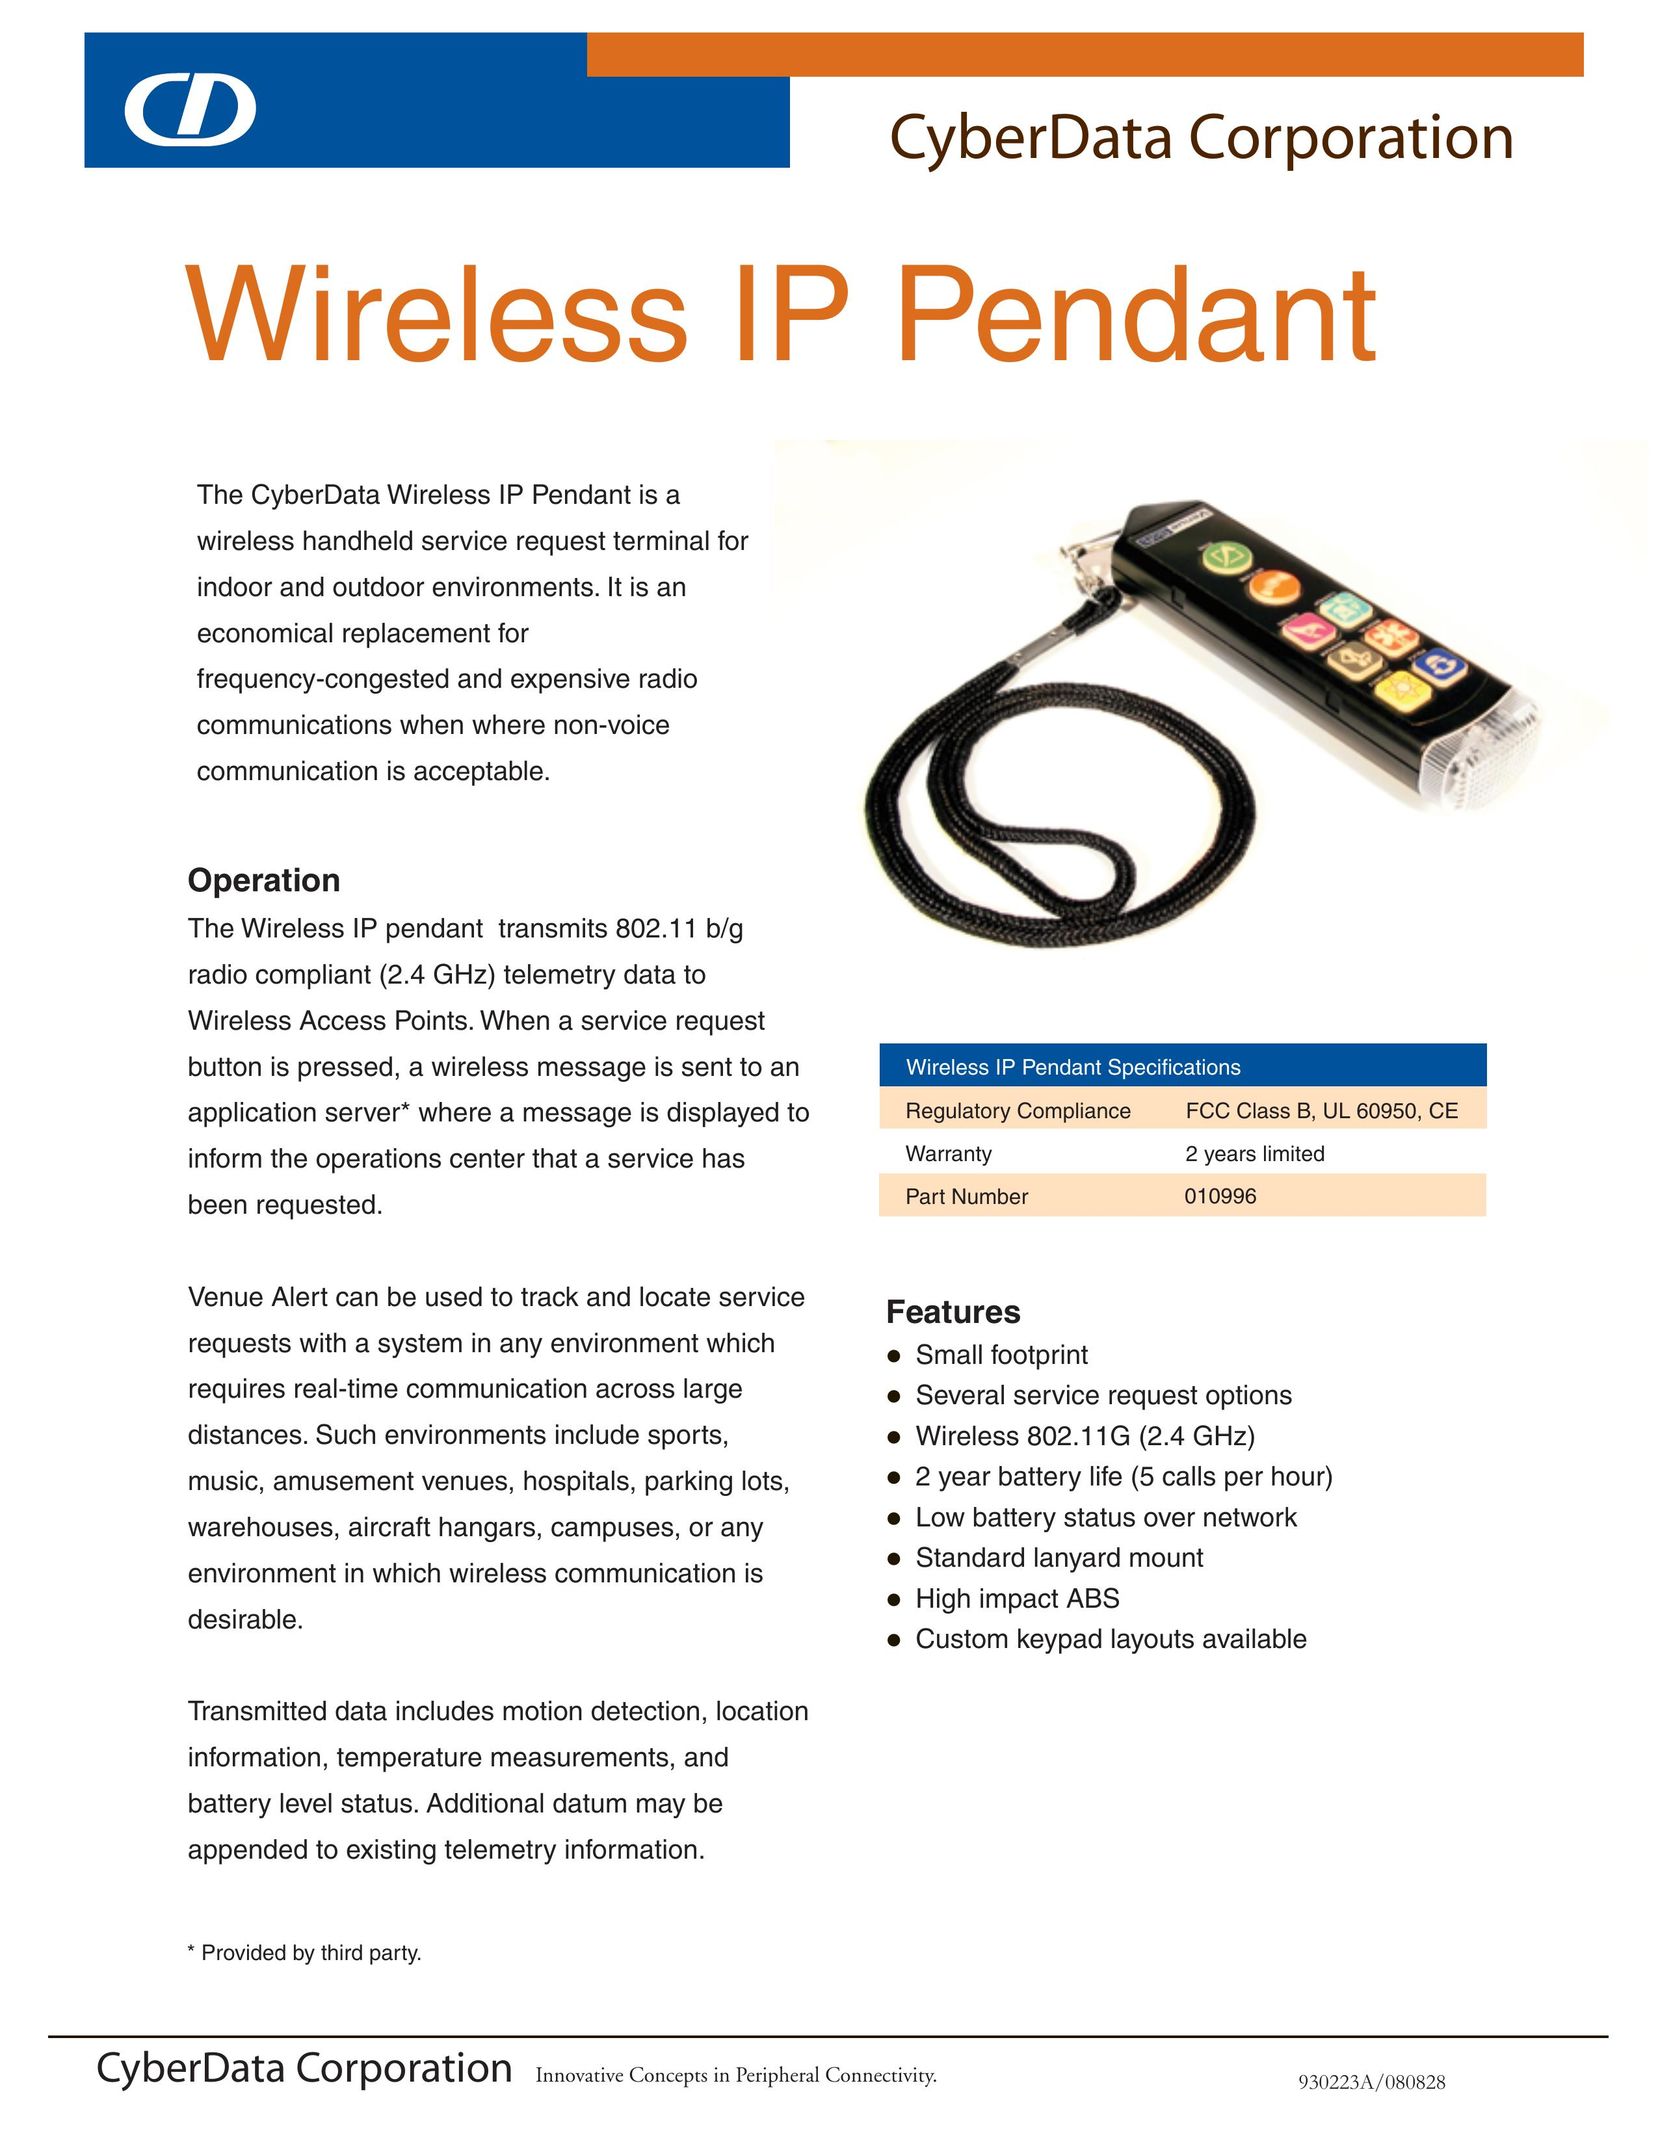 CyberData Wireless IP Pendant Network Card User Manual